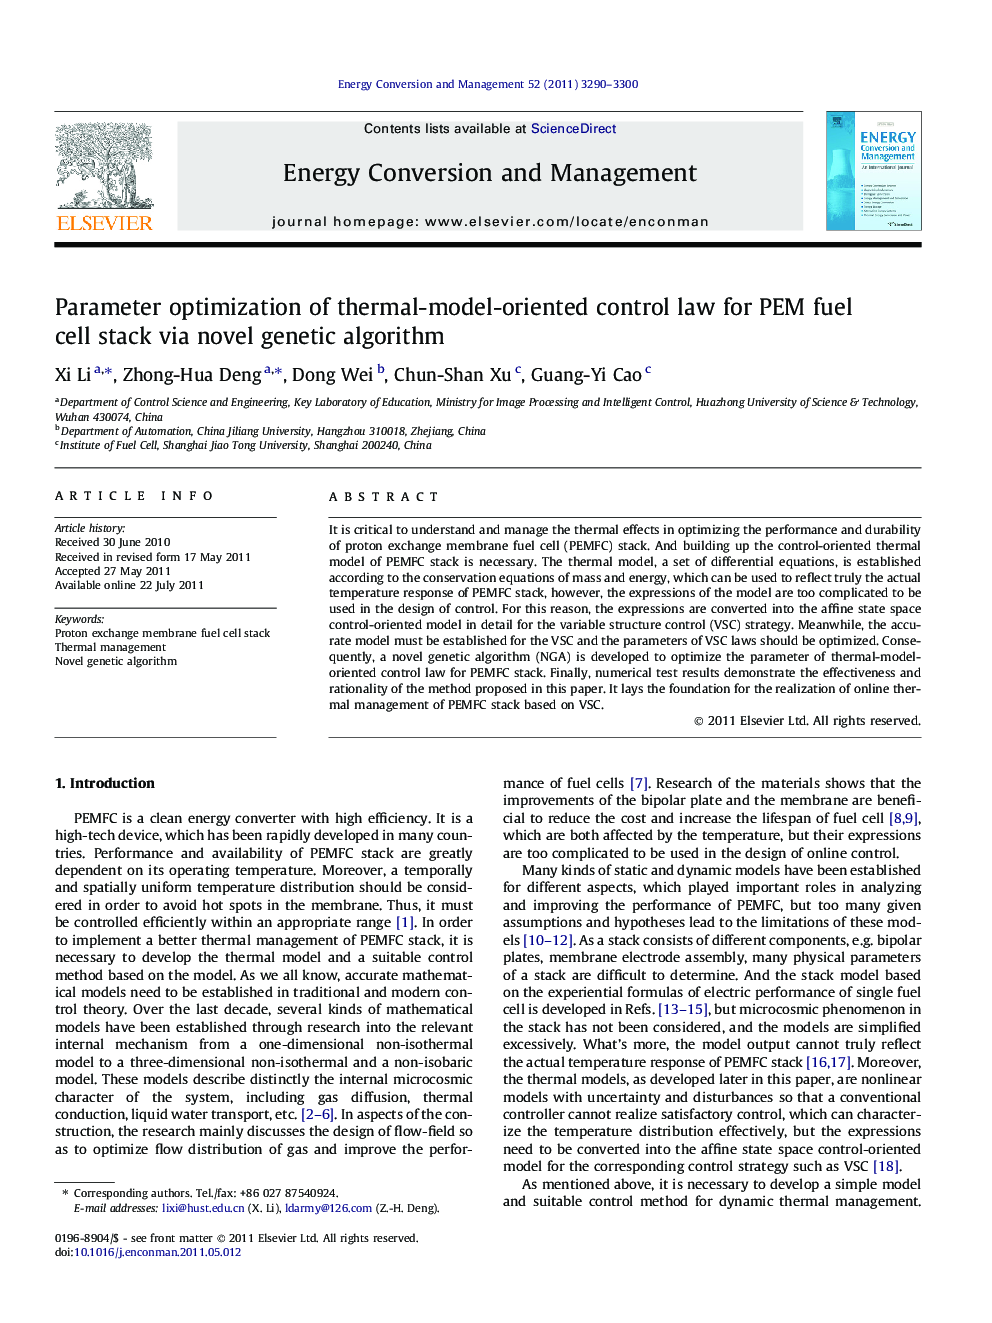 Parameter optimization of thermal-model-oriented control law for PEM fuel cell stack via novel genetic algorithm